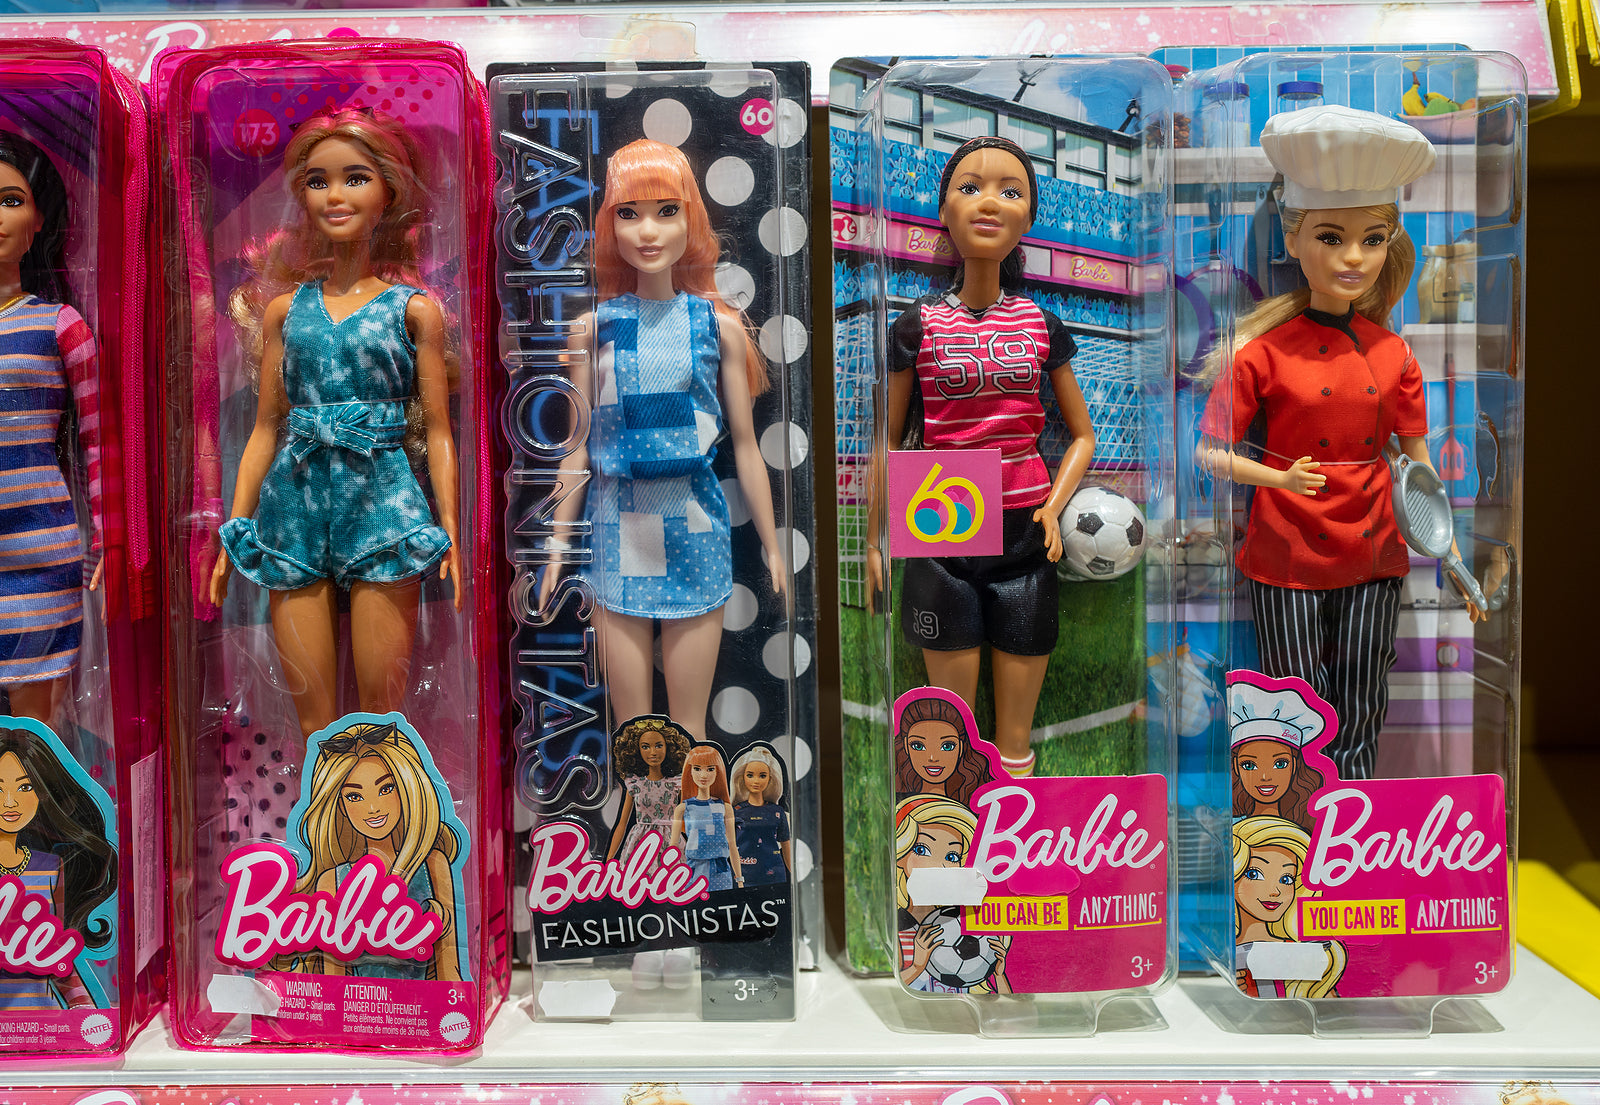 [Australia] Barbie and Matildas help narrow gender pay gap